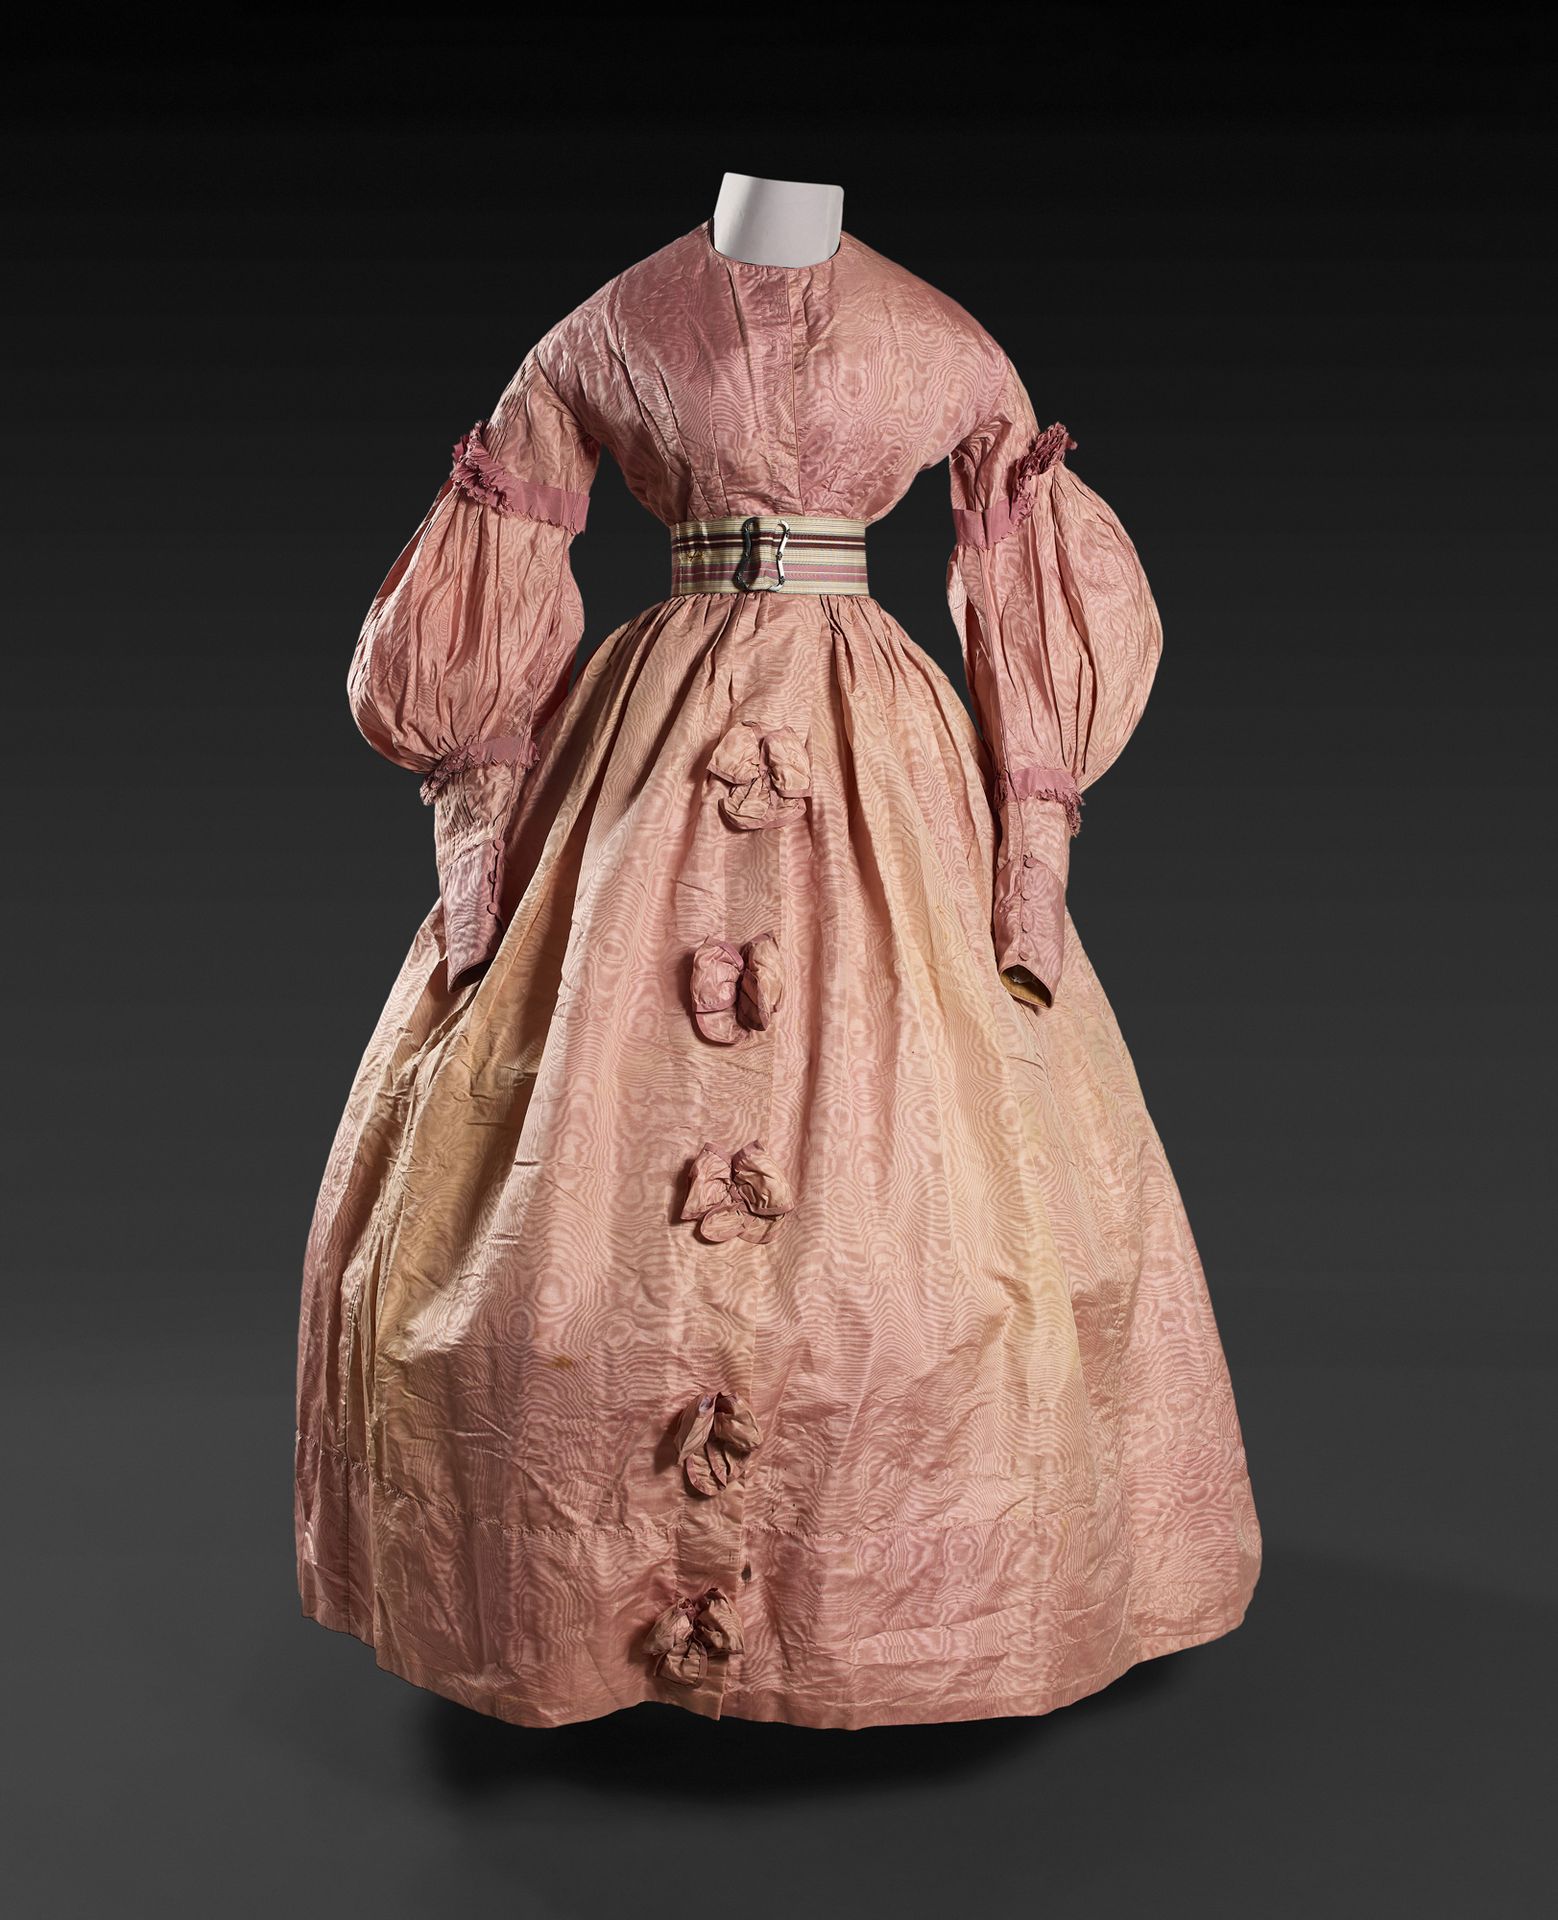 Null 帕尔马摩尔纹丝绸日装，大约在1837-1839年。 
模型前面有纽扣，上衣有褶皱的吉格特袖，肩部以下装饰有淡紫色缎面法尔巴拉，袖口有纽扣。裙子前面有装&hellip;